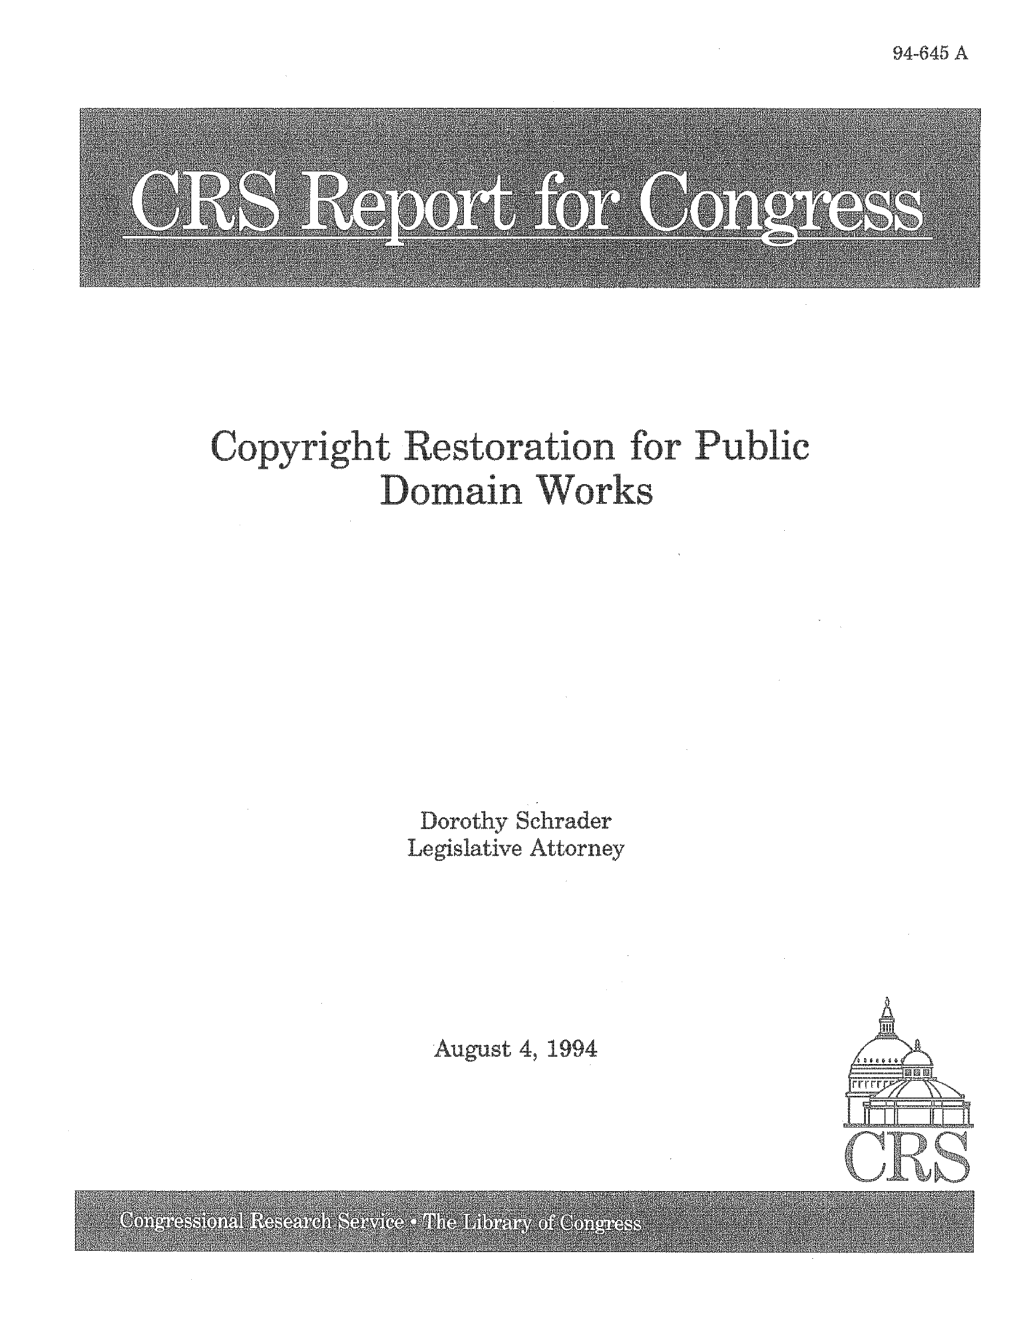 Copyright Restoration for Public Domain Works